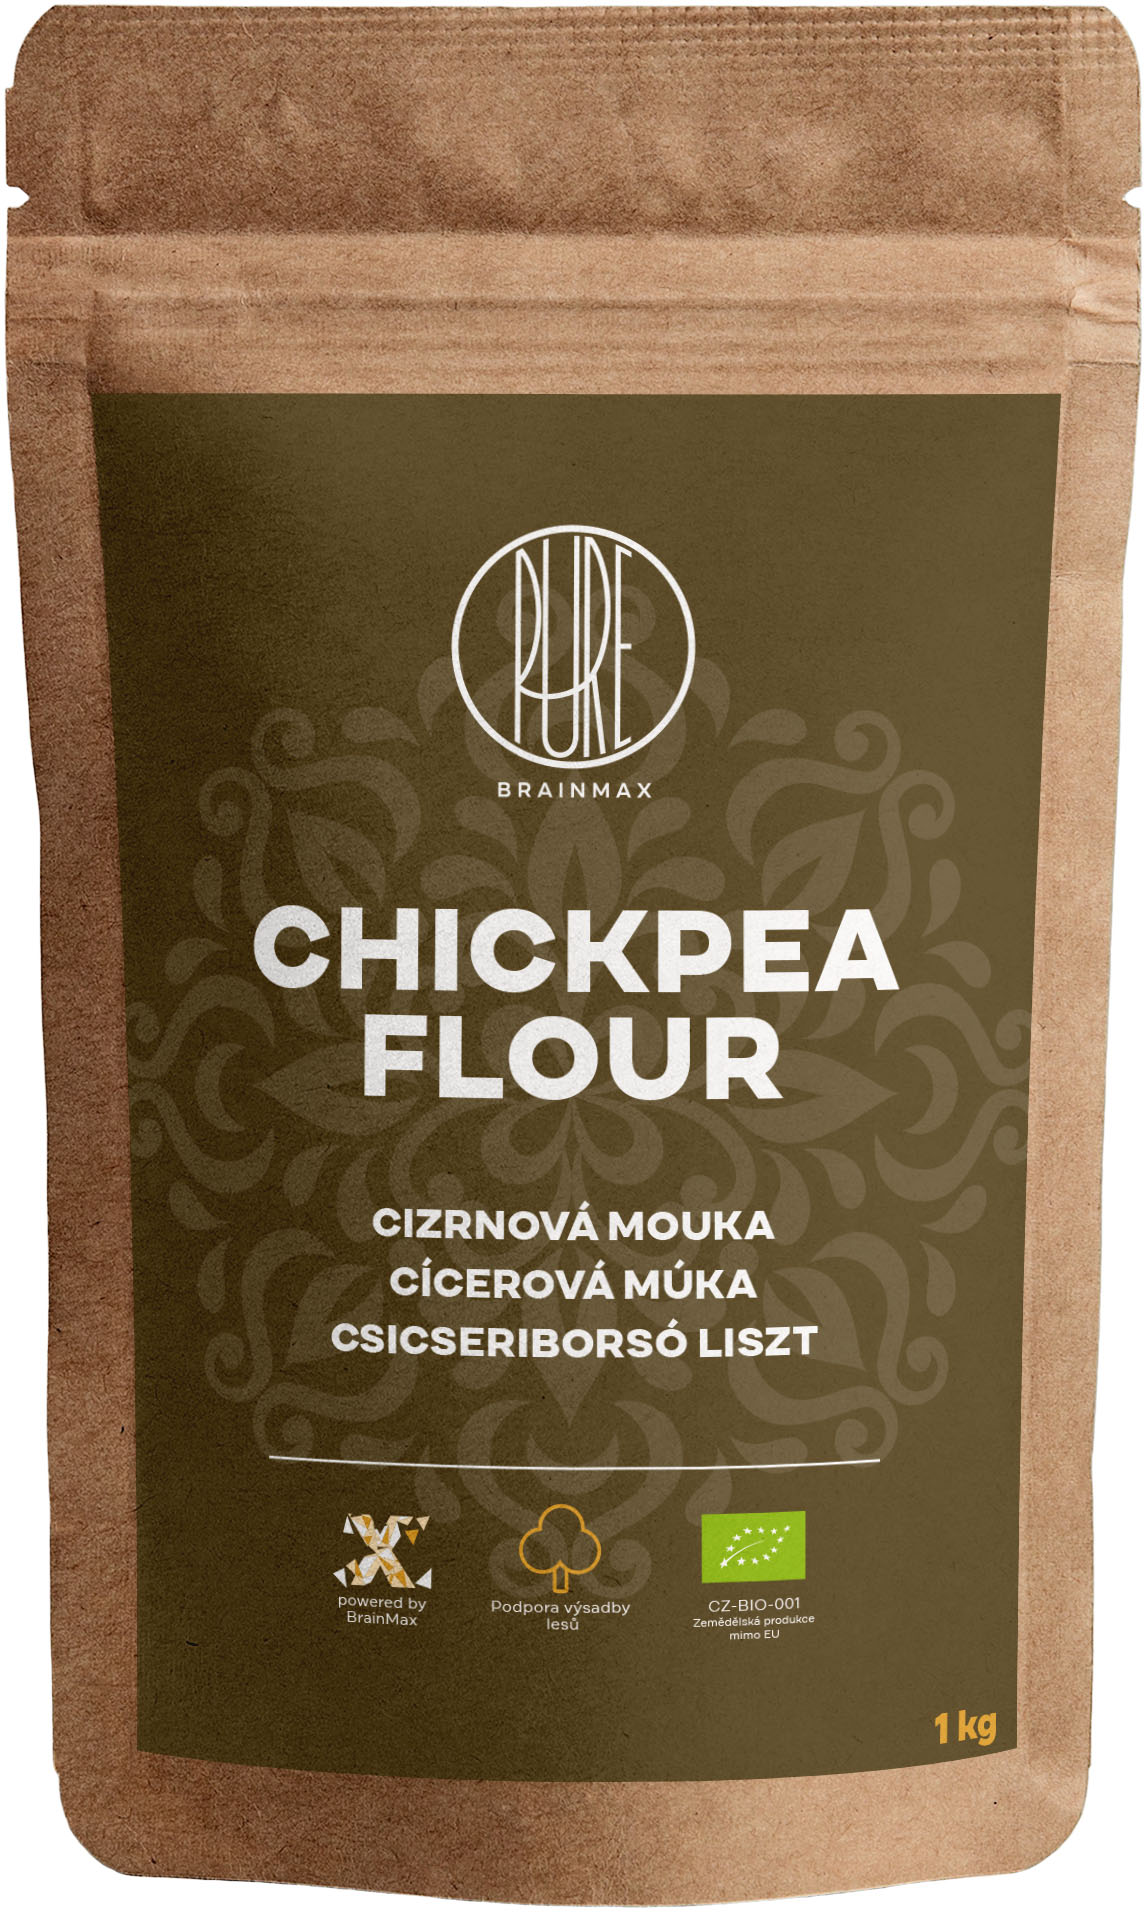 BrainMax Pure Chickpea Flour, Cizrnová mouka BIO, 1 kg *CZ-BIO-001 certifikát